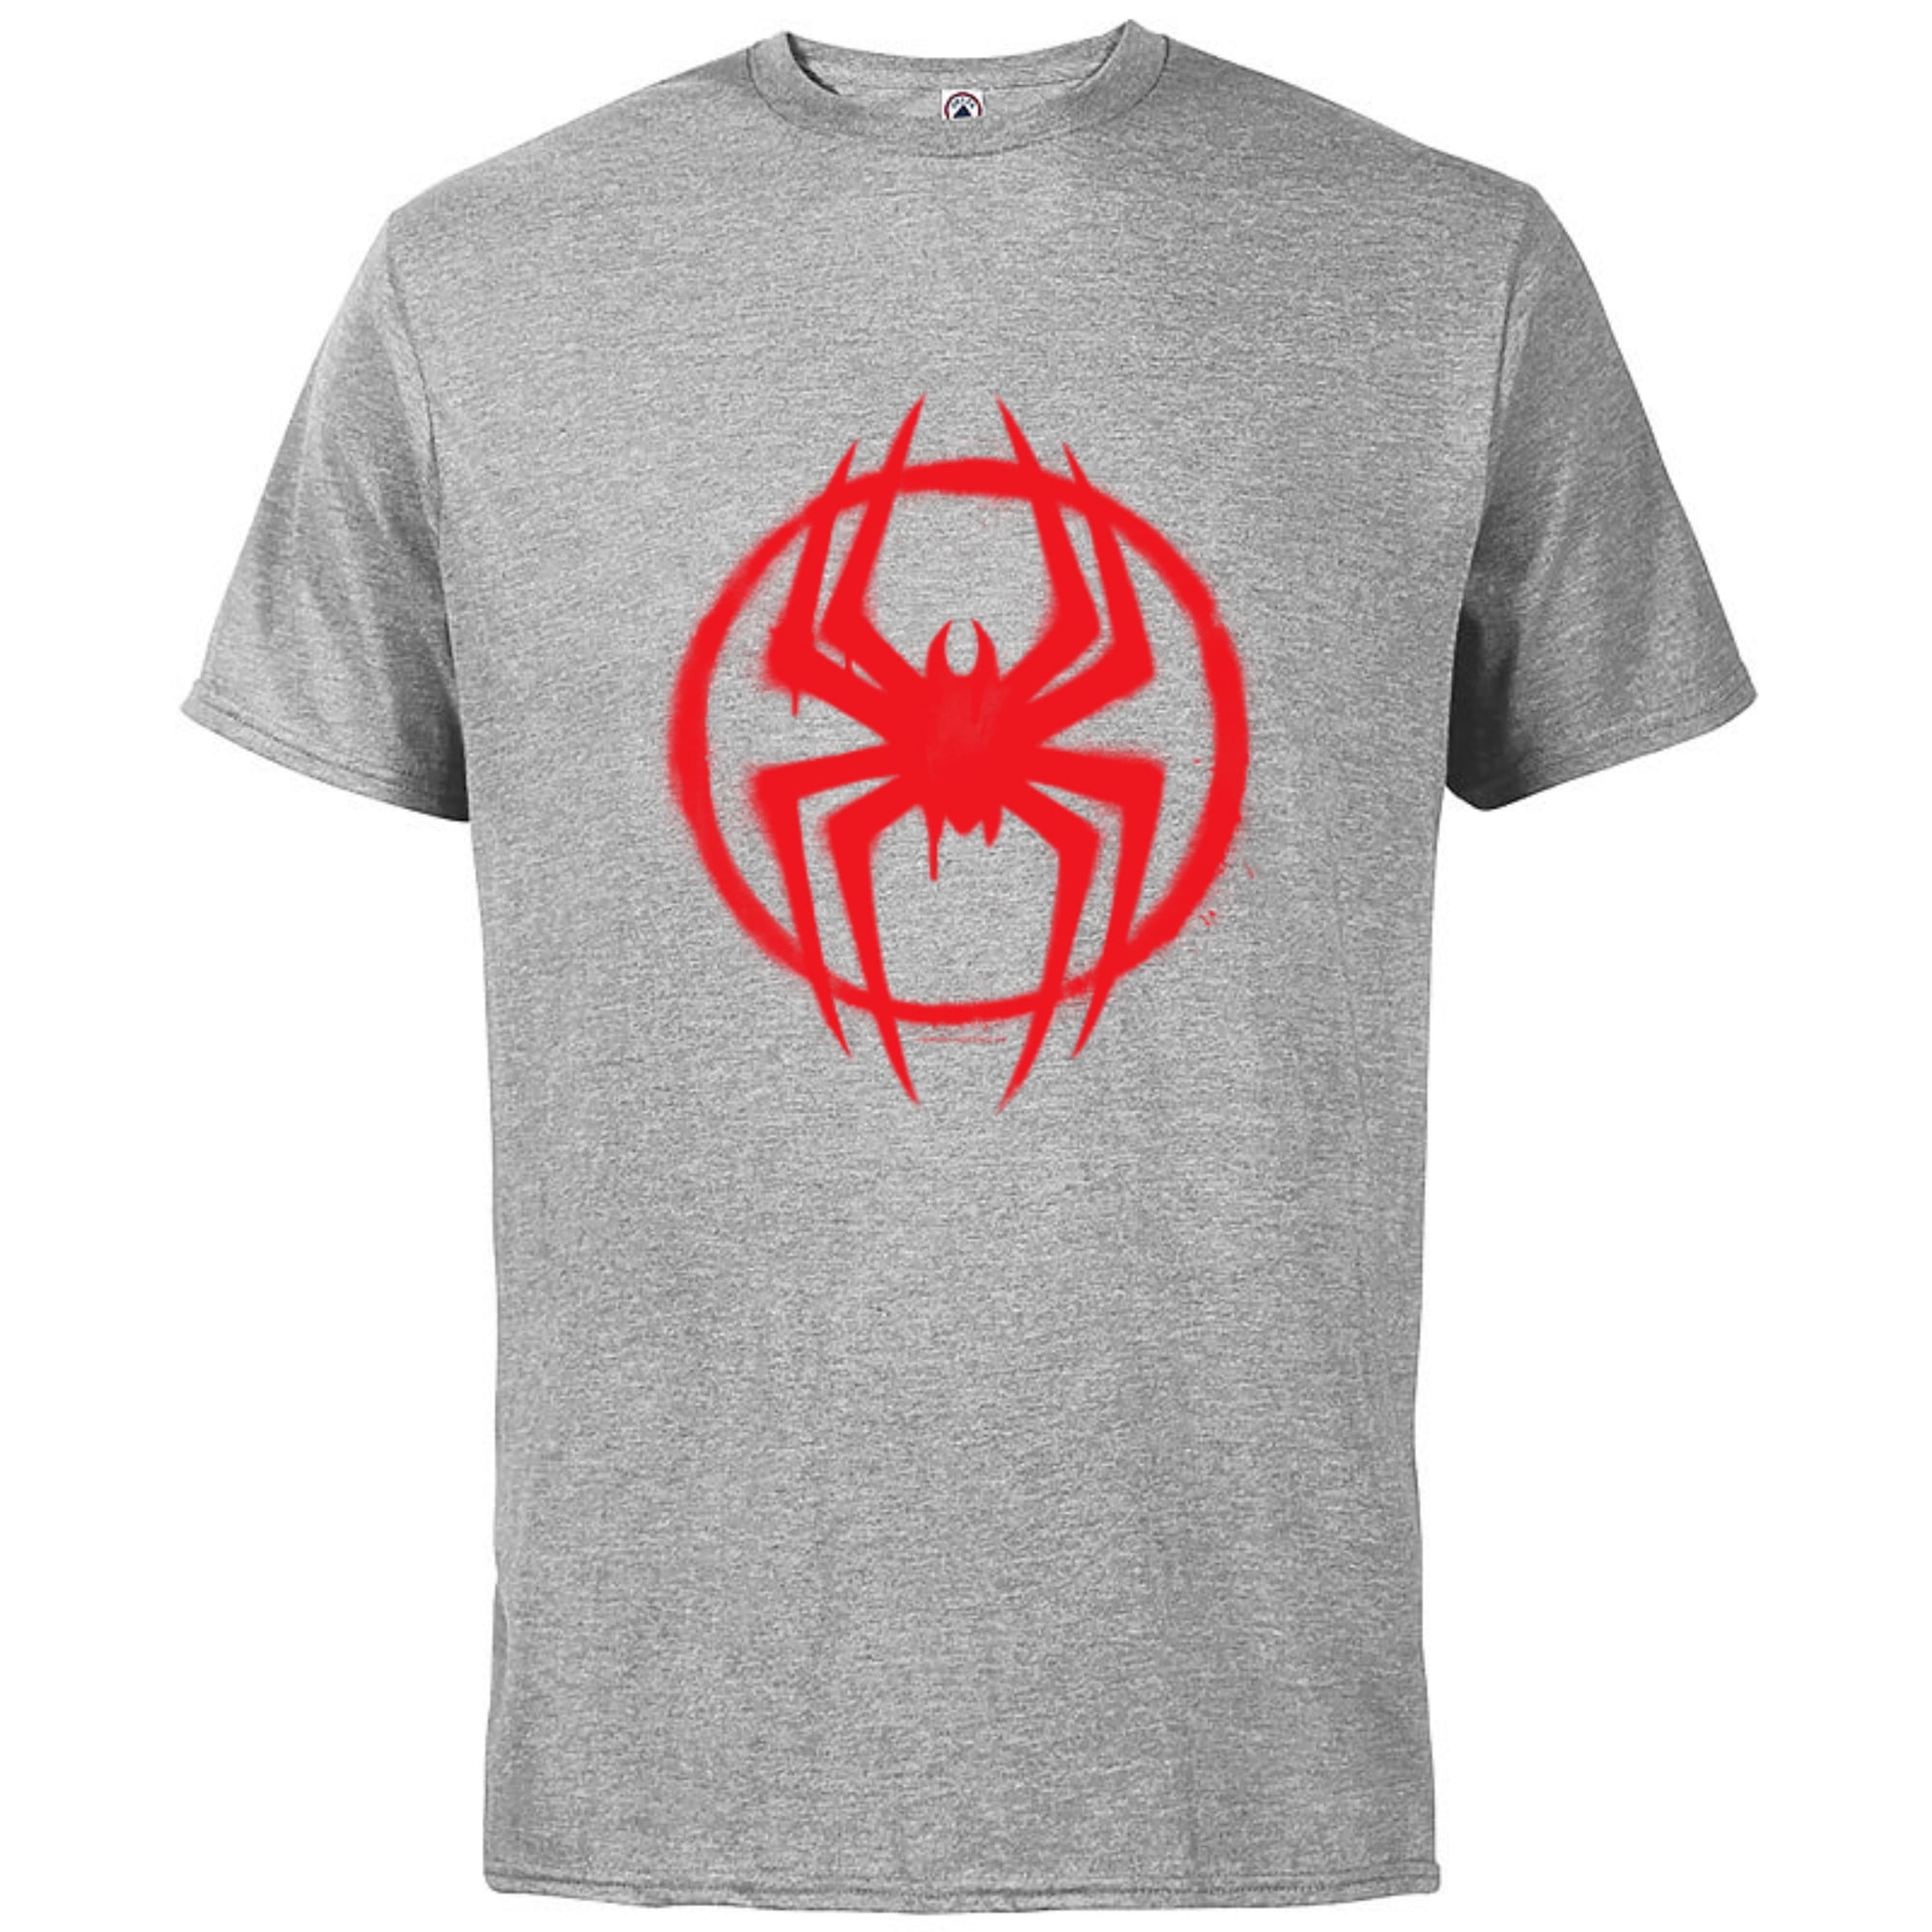 Superhero Spiderman Compression Shirt Short Sleeve Workout Shirt